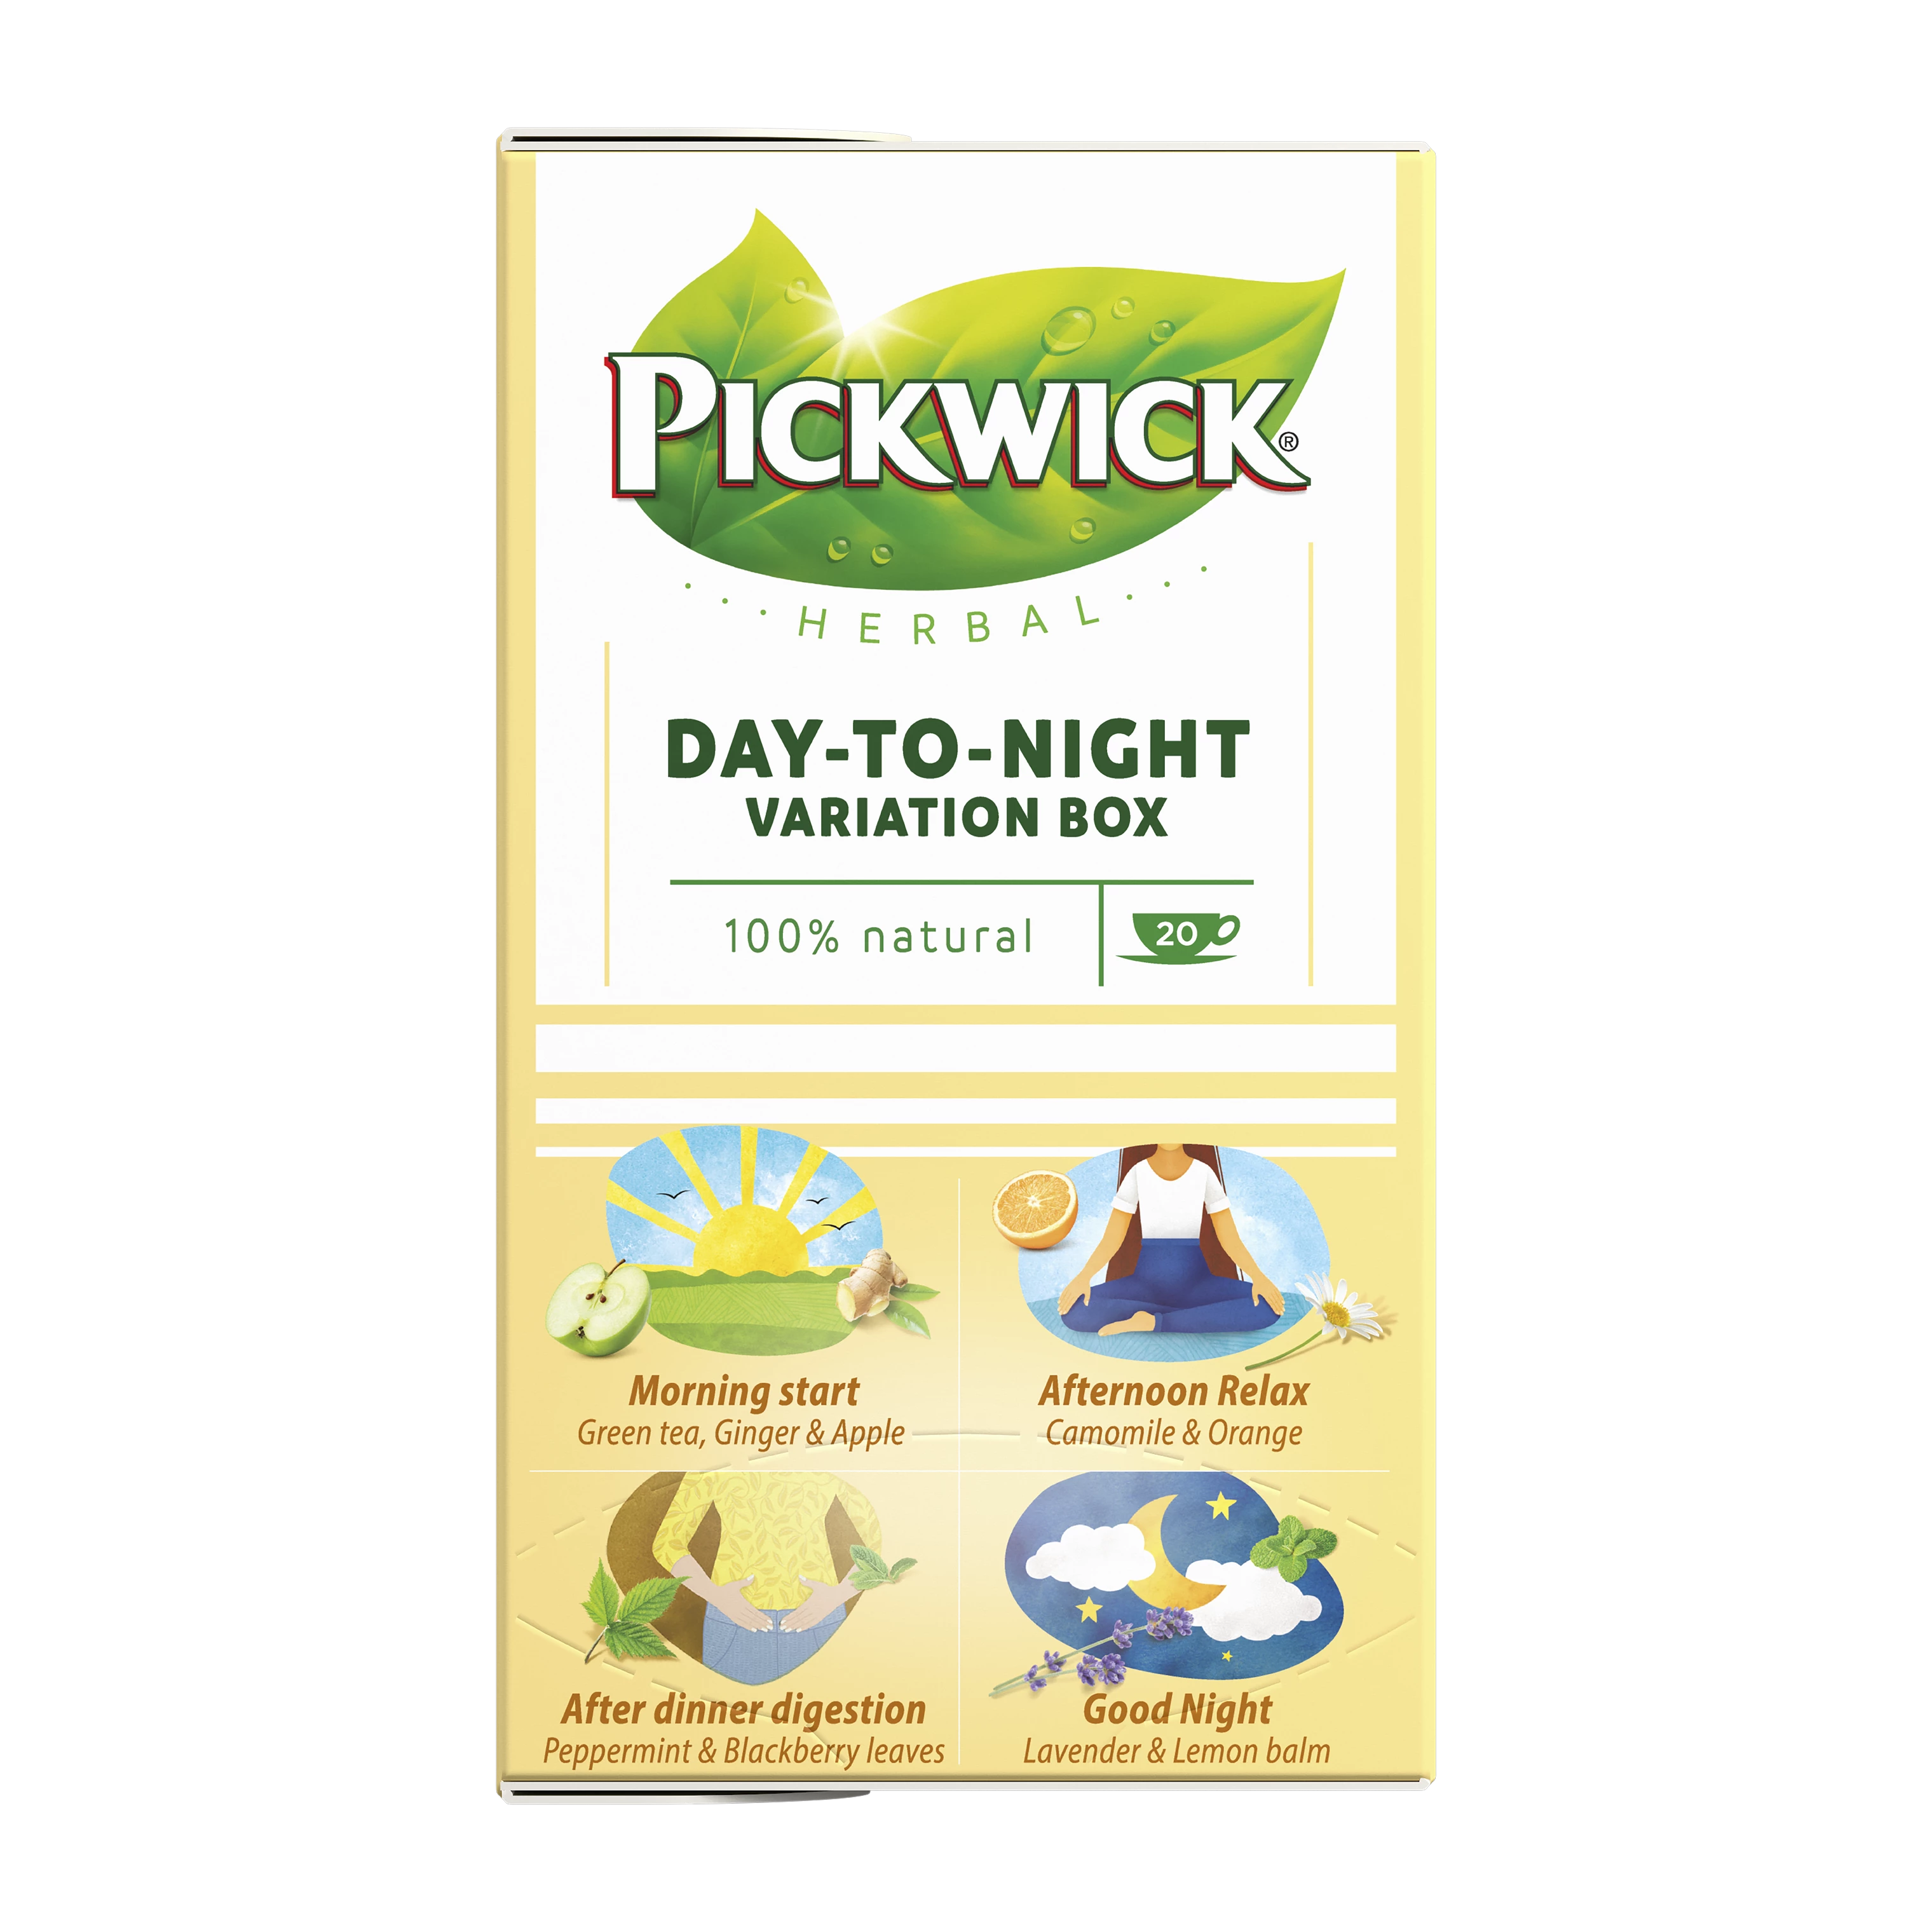 Pickwick day to night variation box visuals